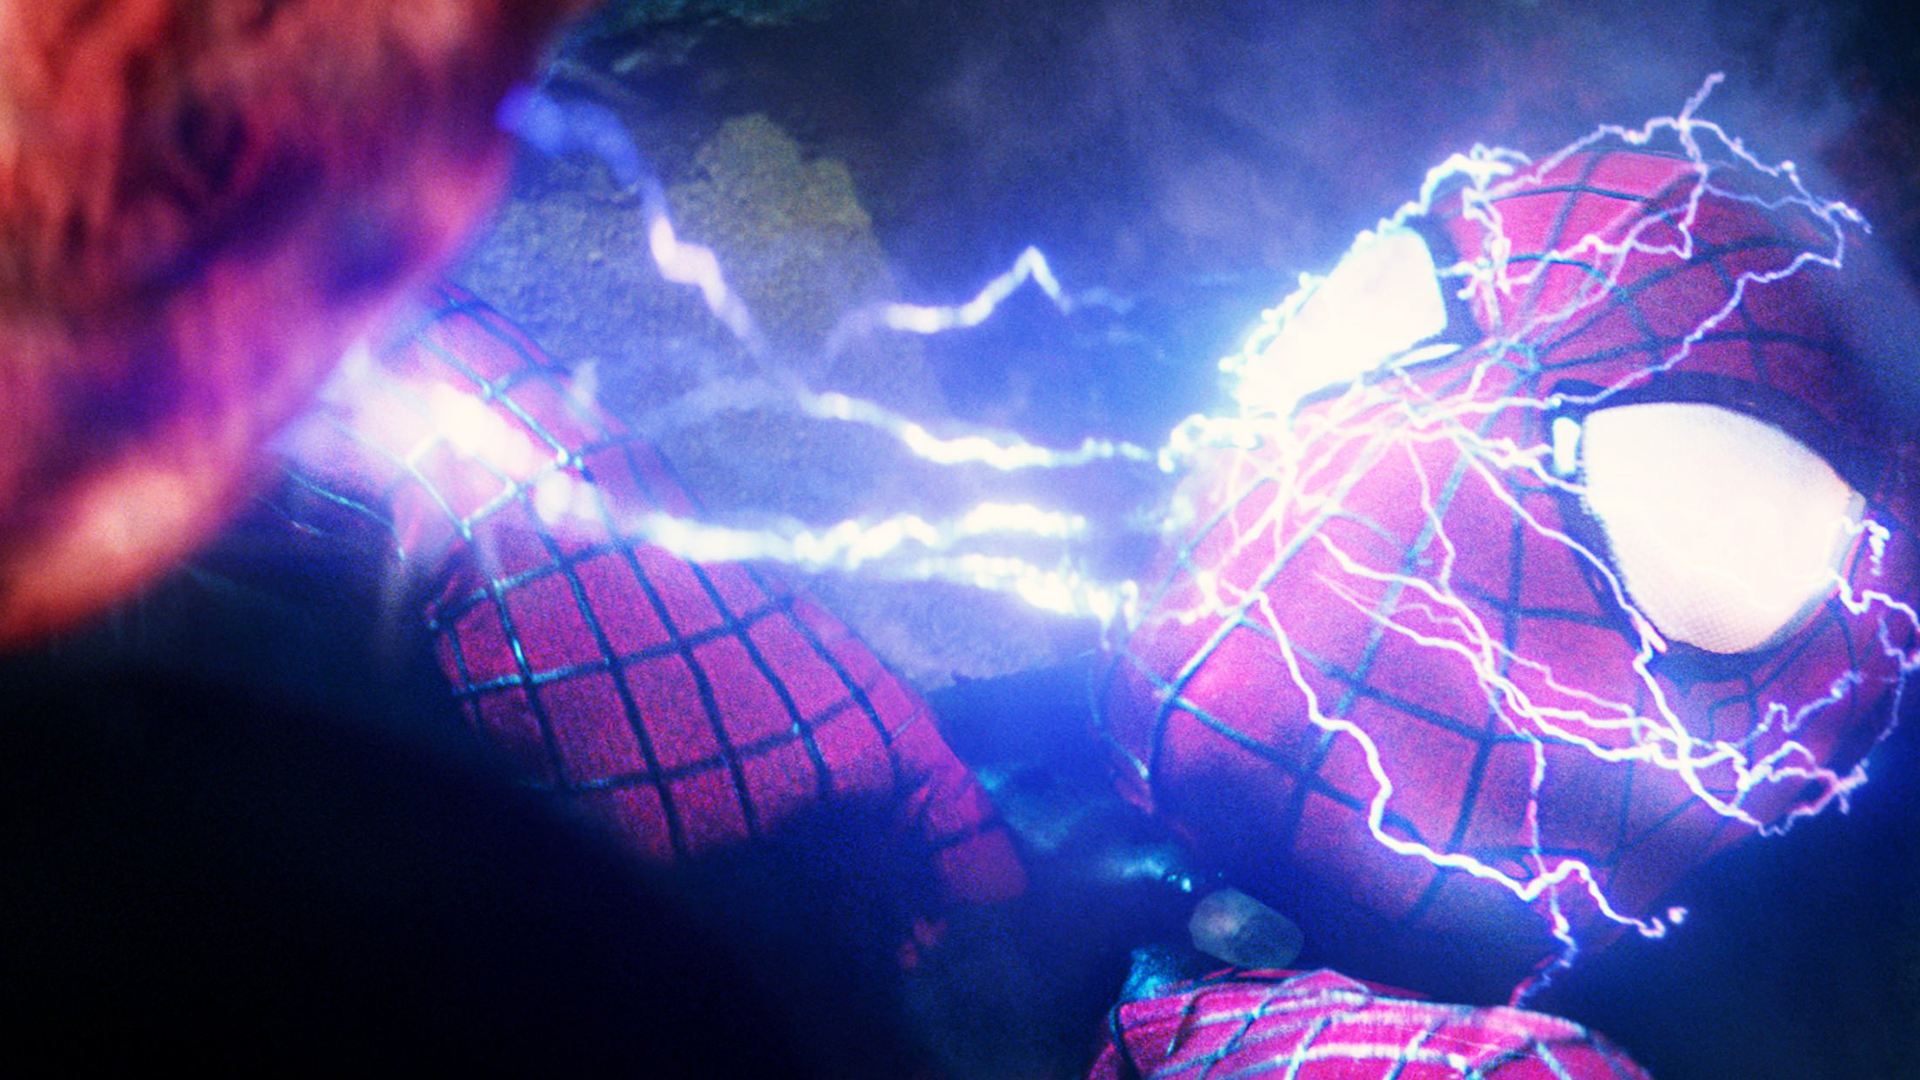 Amazing Spider Man Wallpaper HD 1080p Electro Vs